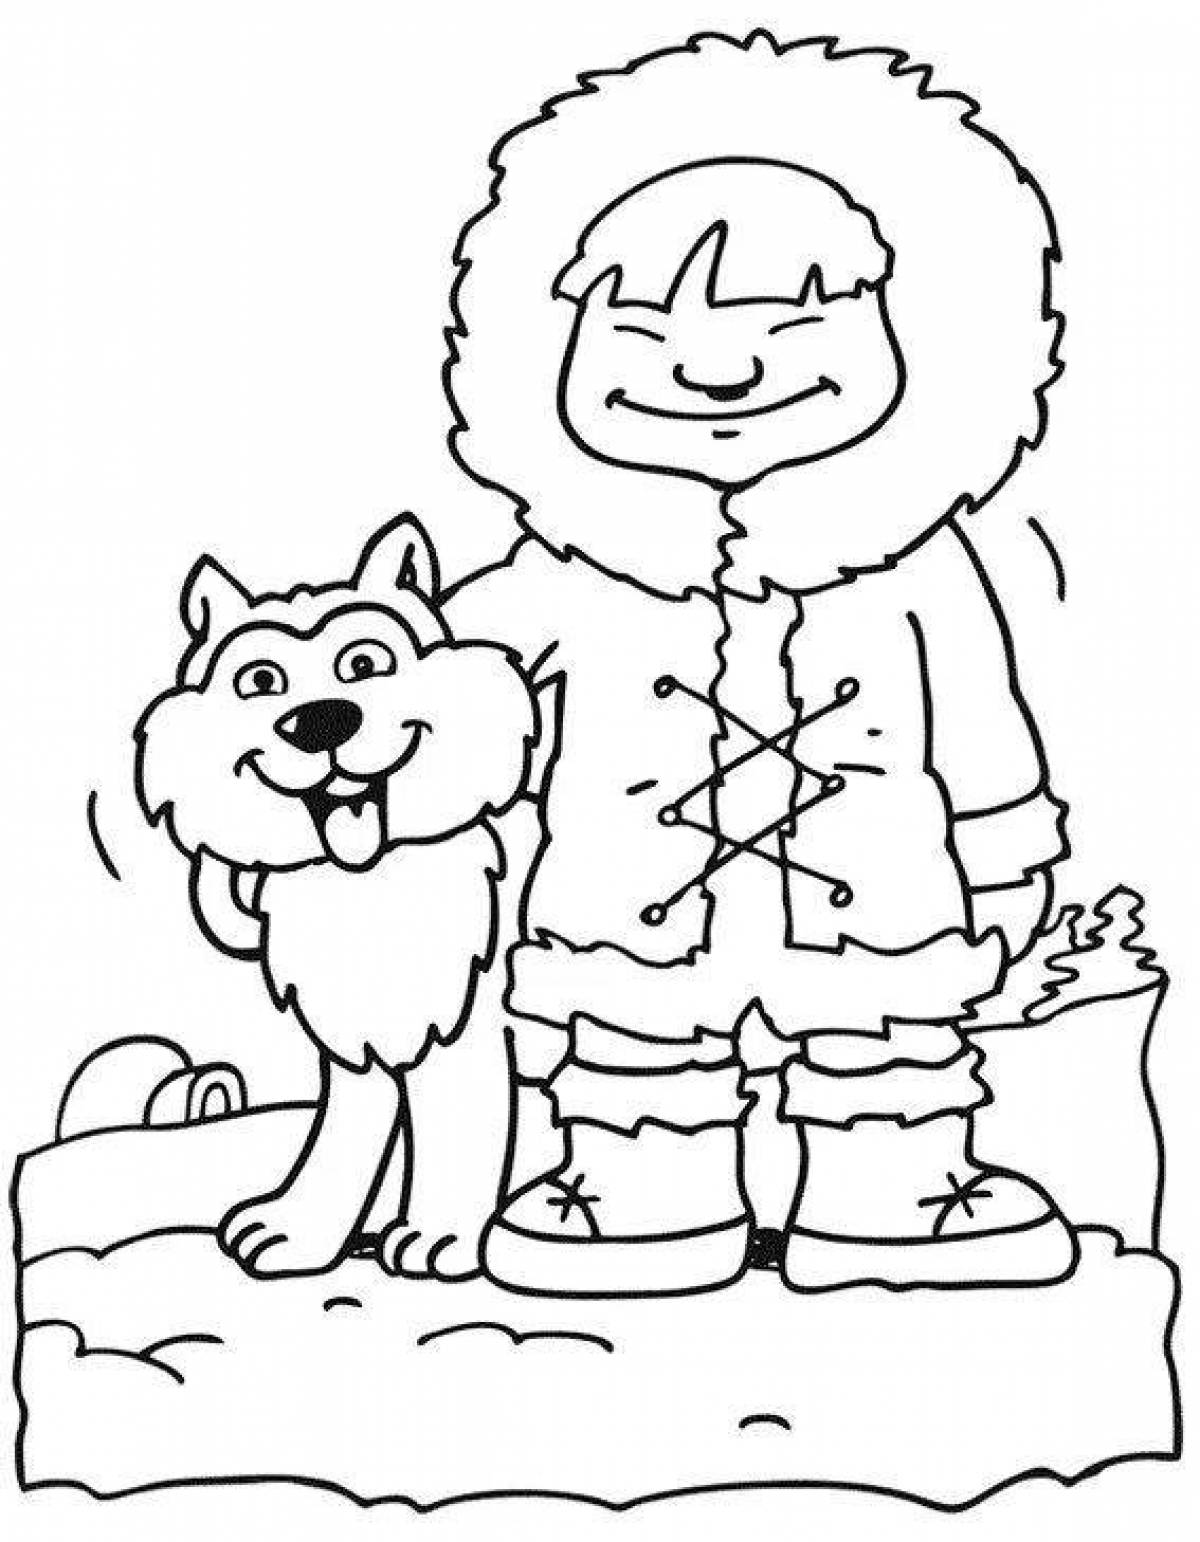 Playful eskimo coloring book